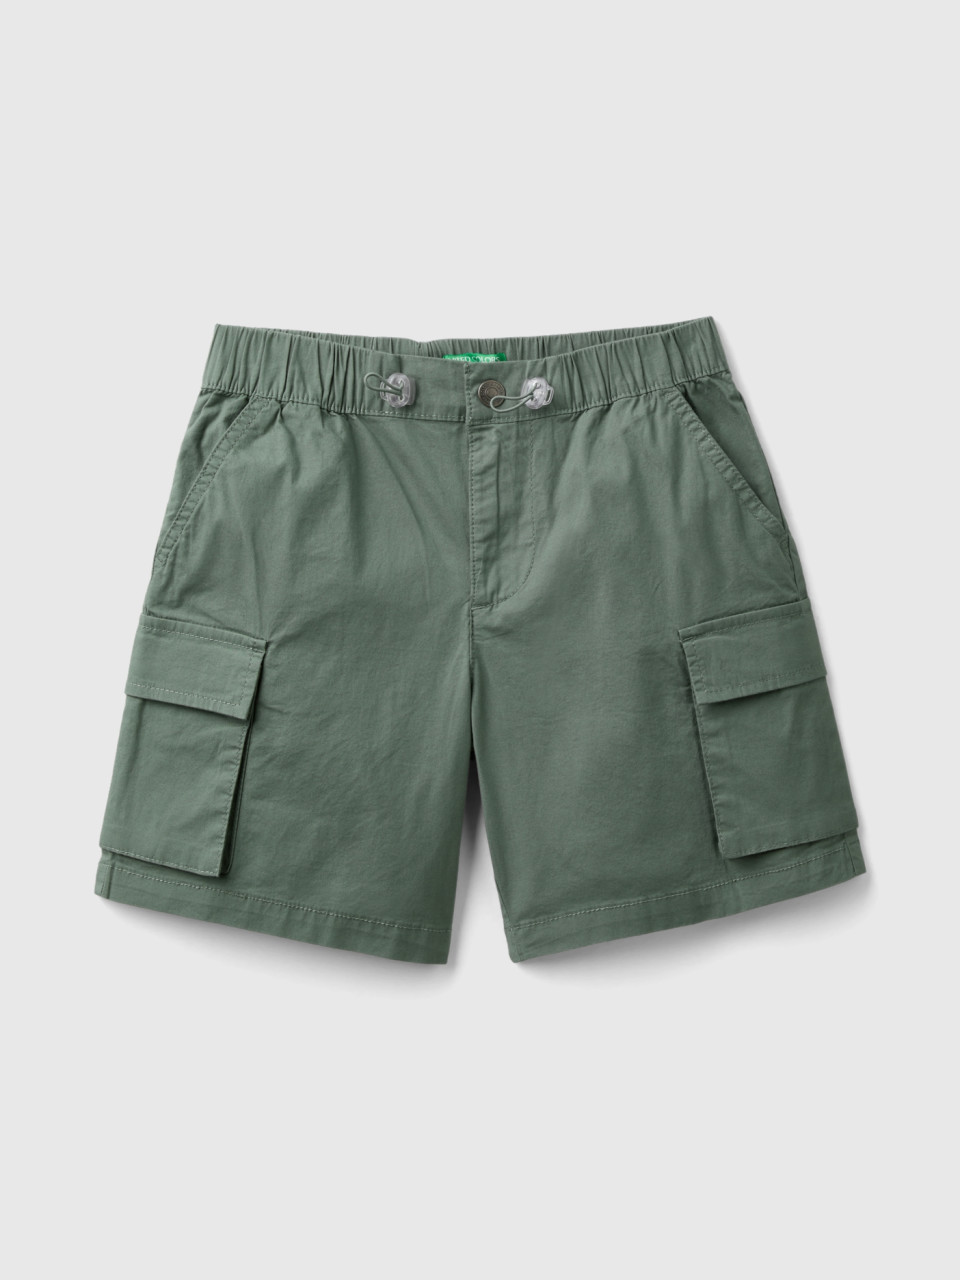 Benetton, Cargo Bermuda Shorts In Stretch Cotton, Military Green, Kids